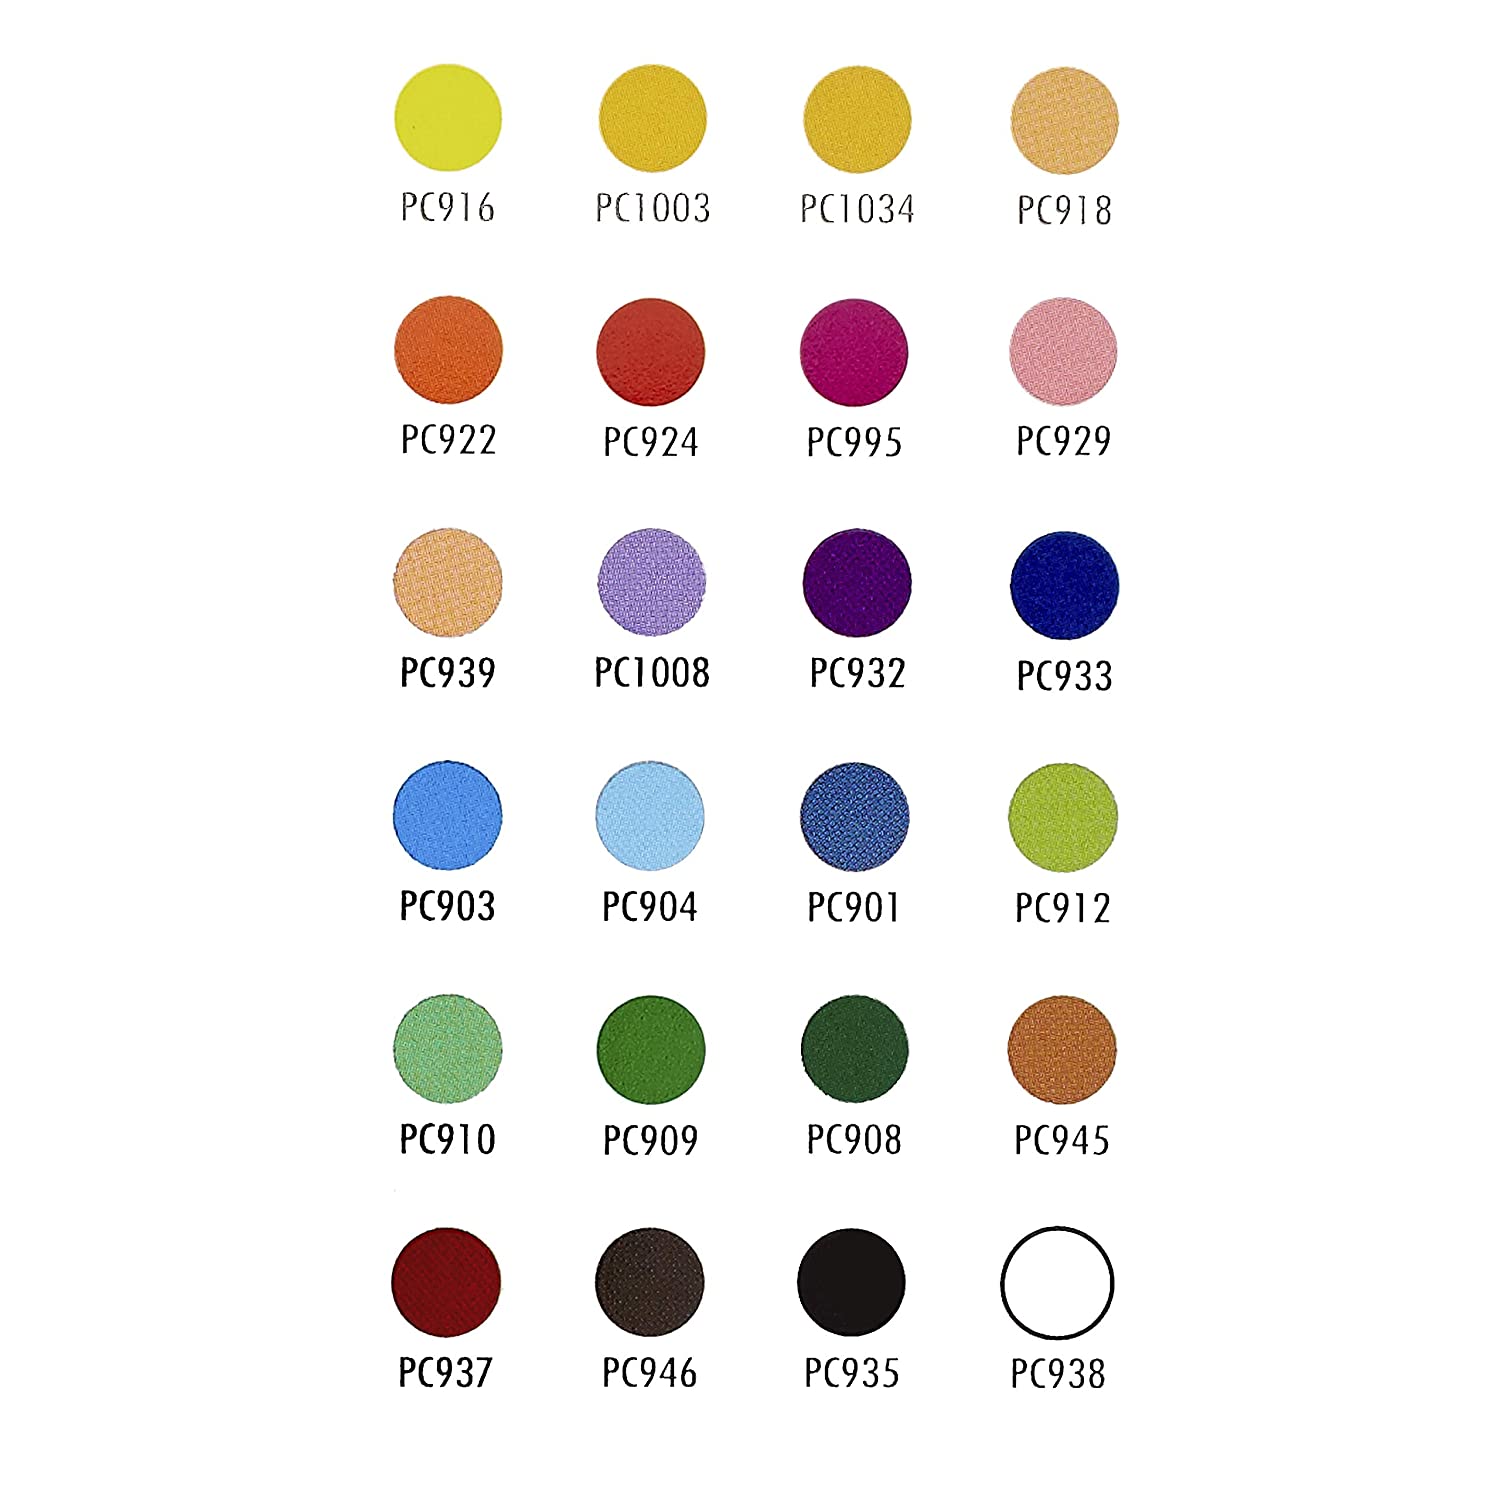 Prismacolor Premier Colored Pencil shades